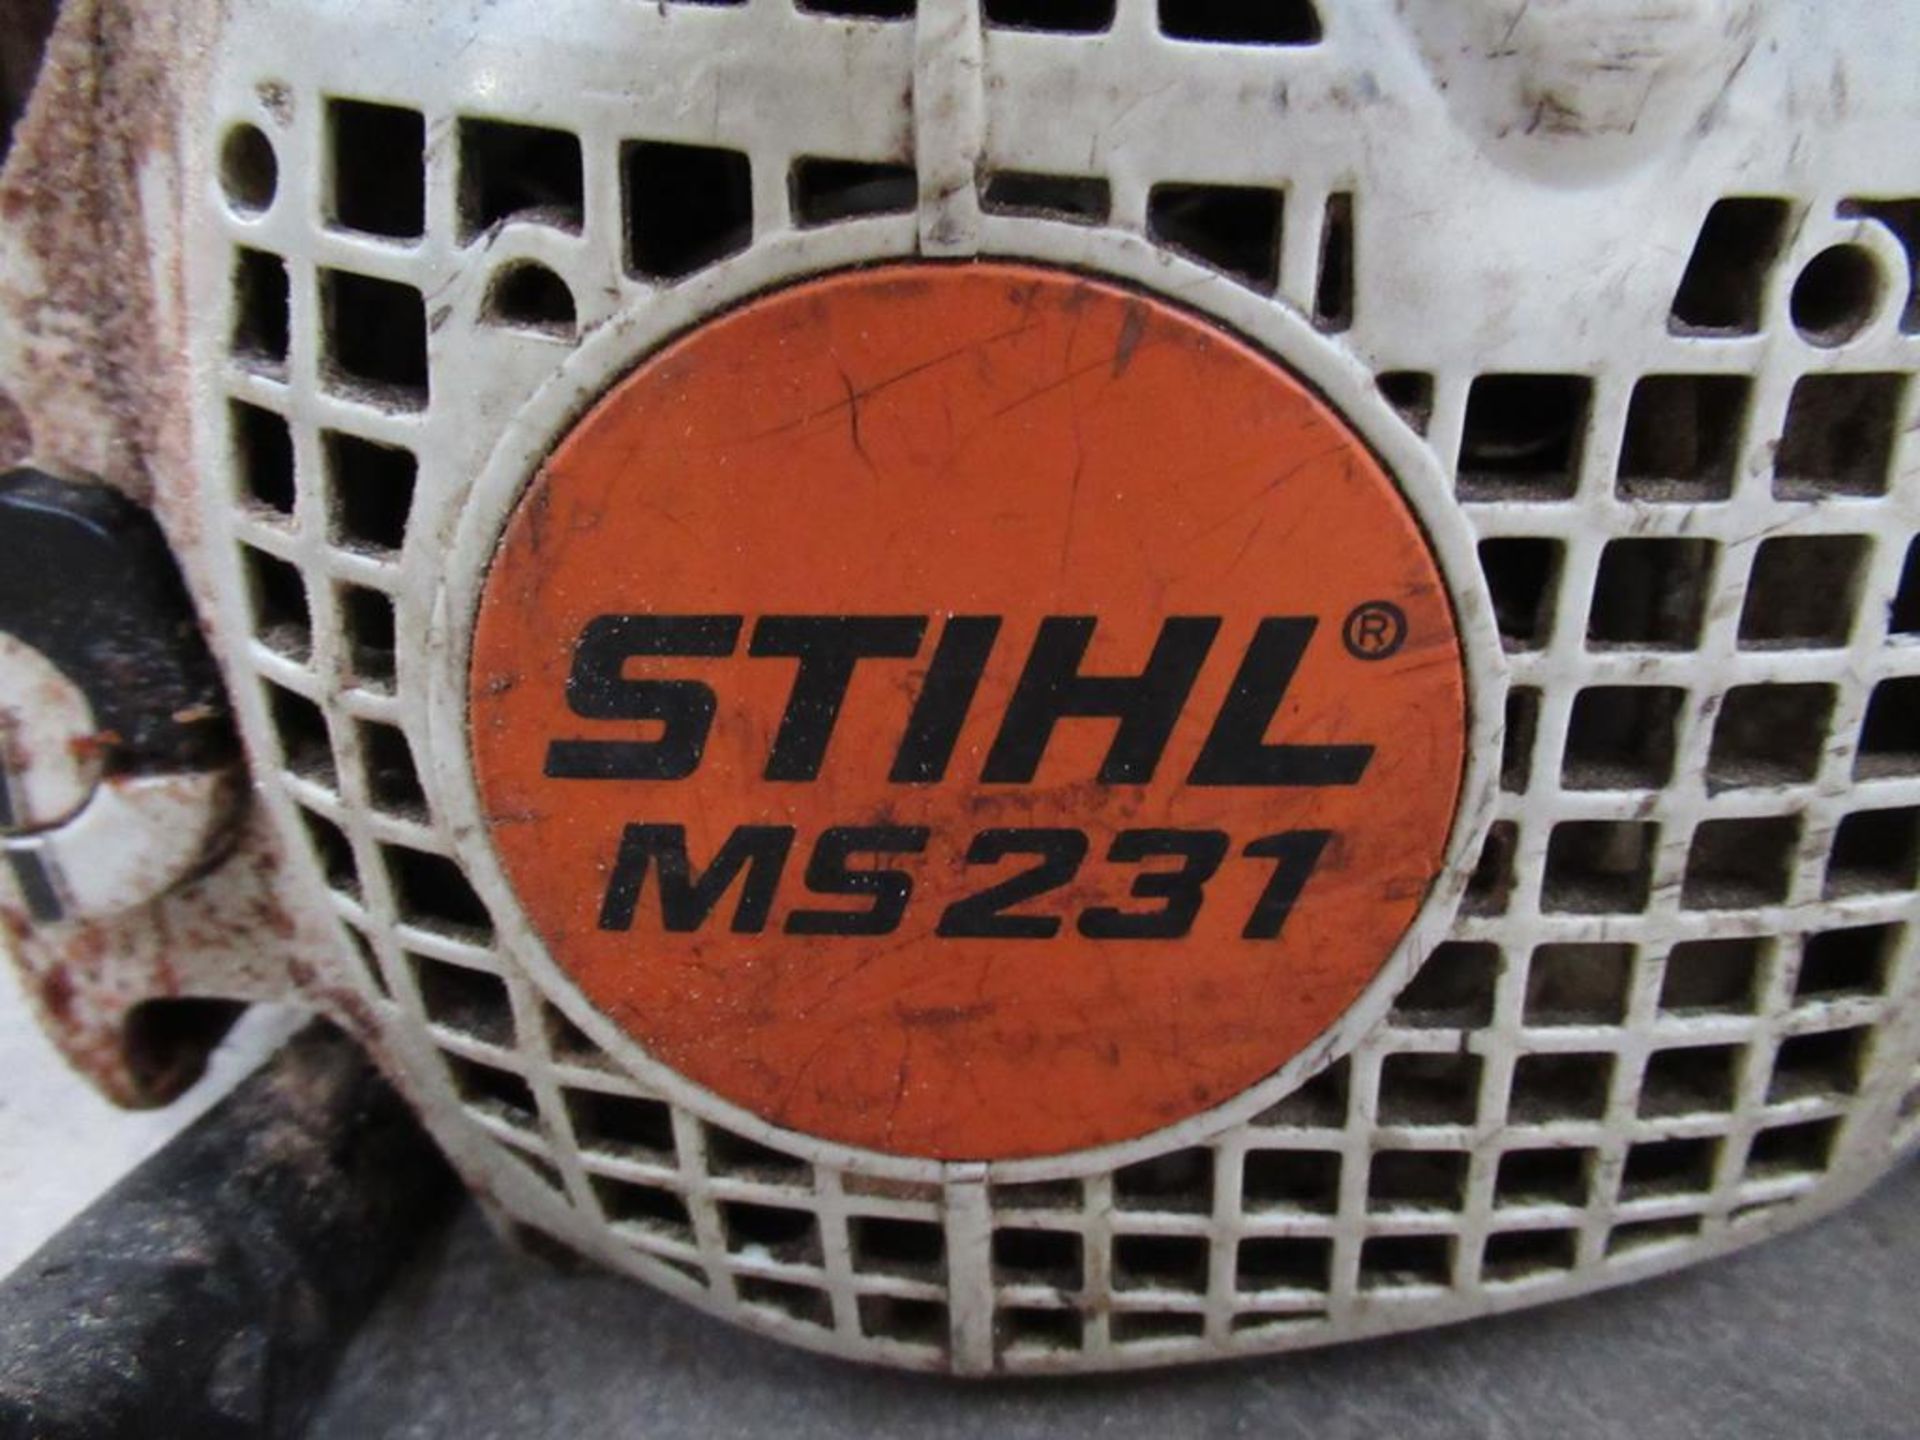 Stihl M5231 Chainsaw - Image 2 of 3